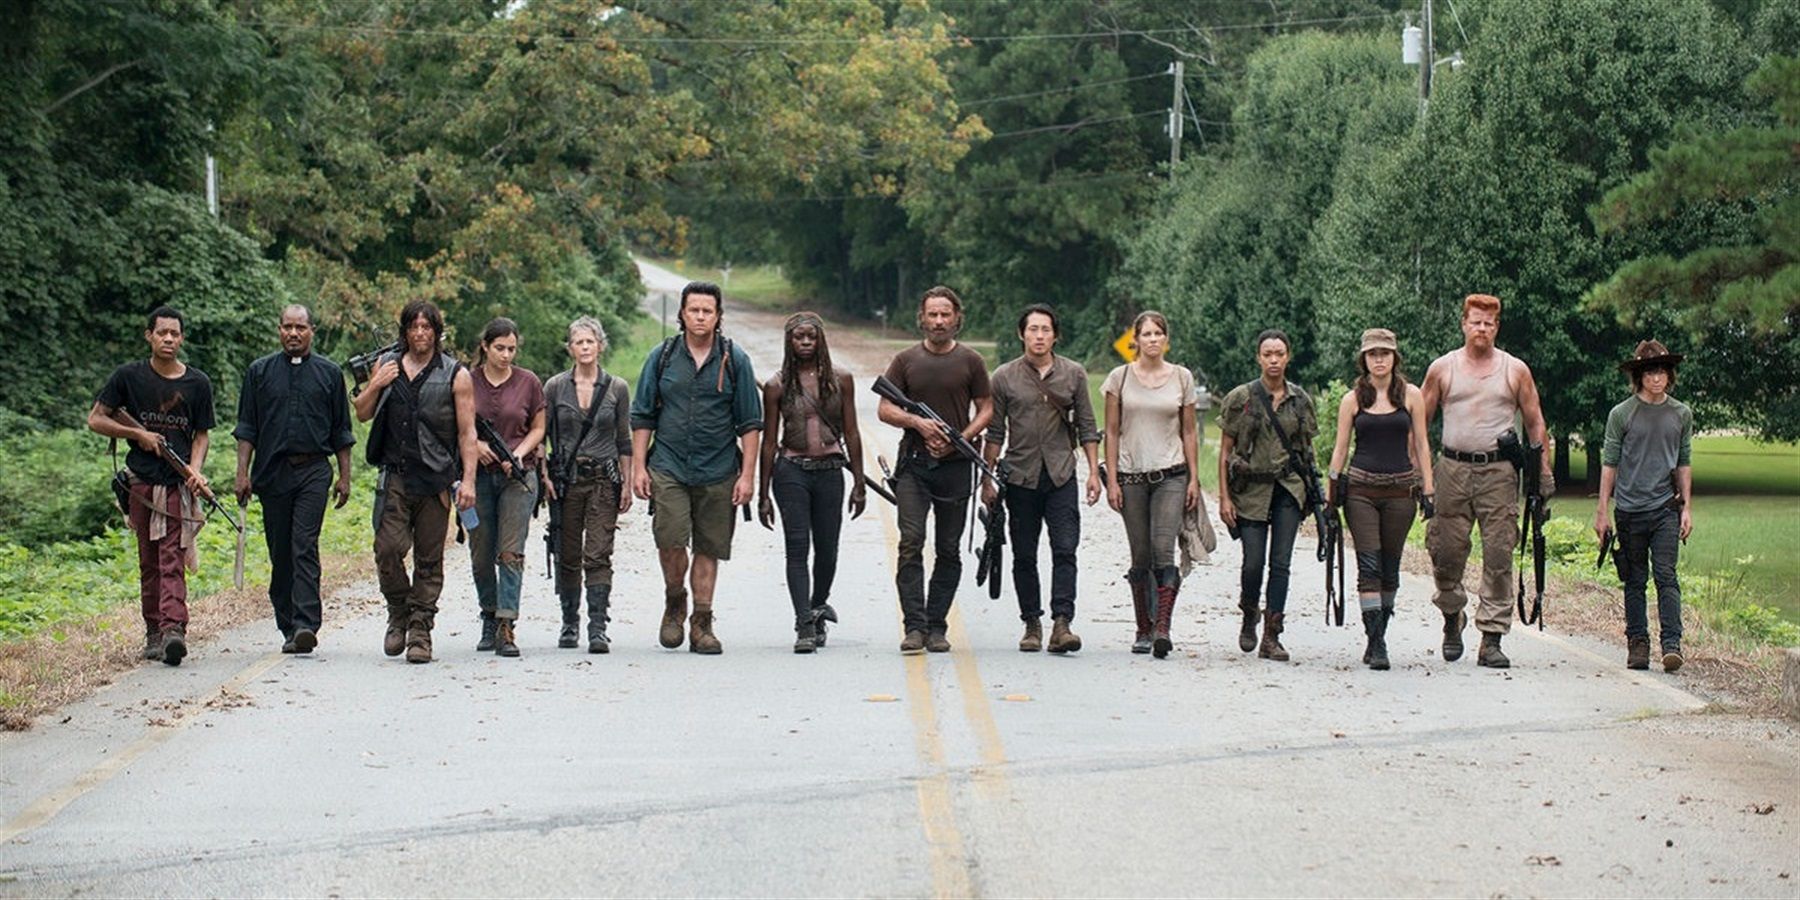 The Walking Dead - Group Shot